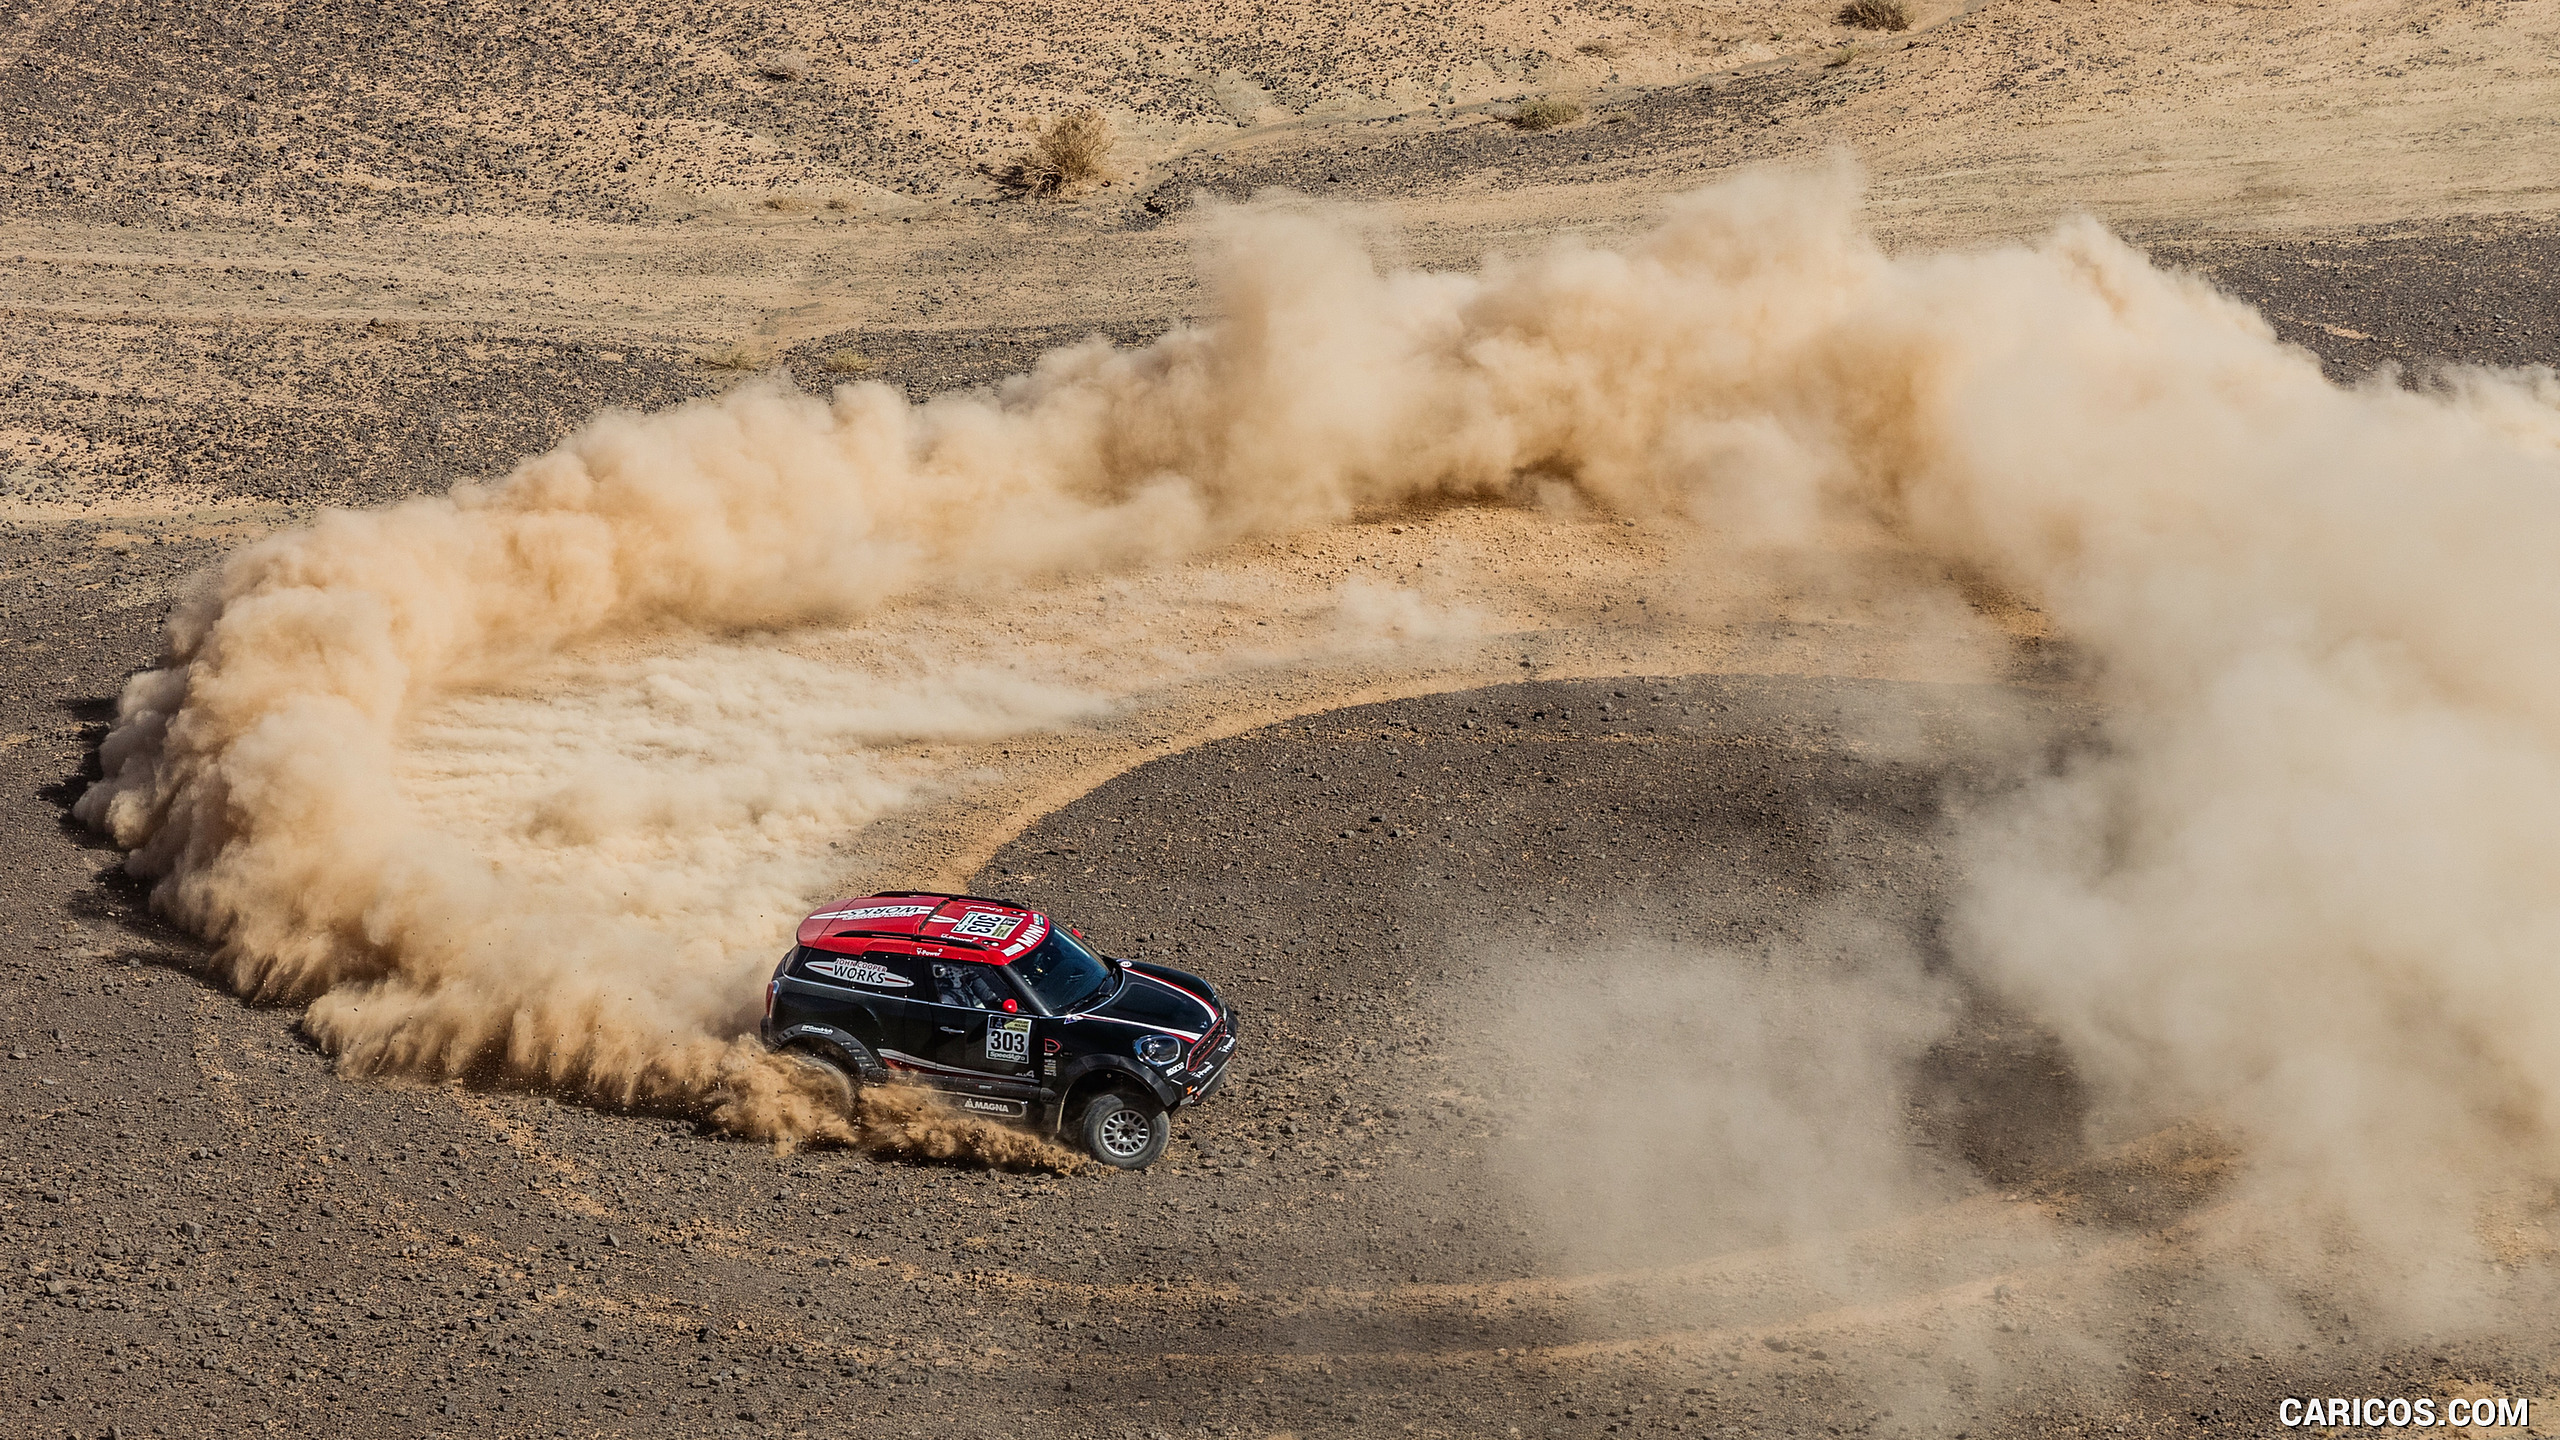 2017 MINI Countryman John Cooper Works Rally - In a Desert - Top, #16 of 58